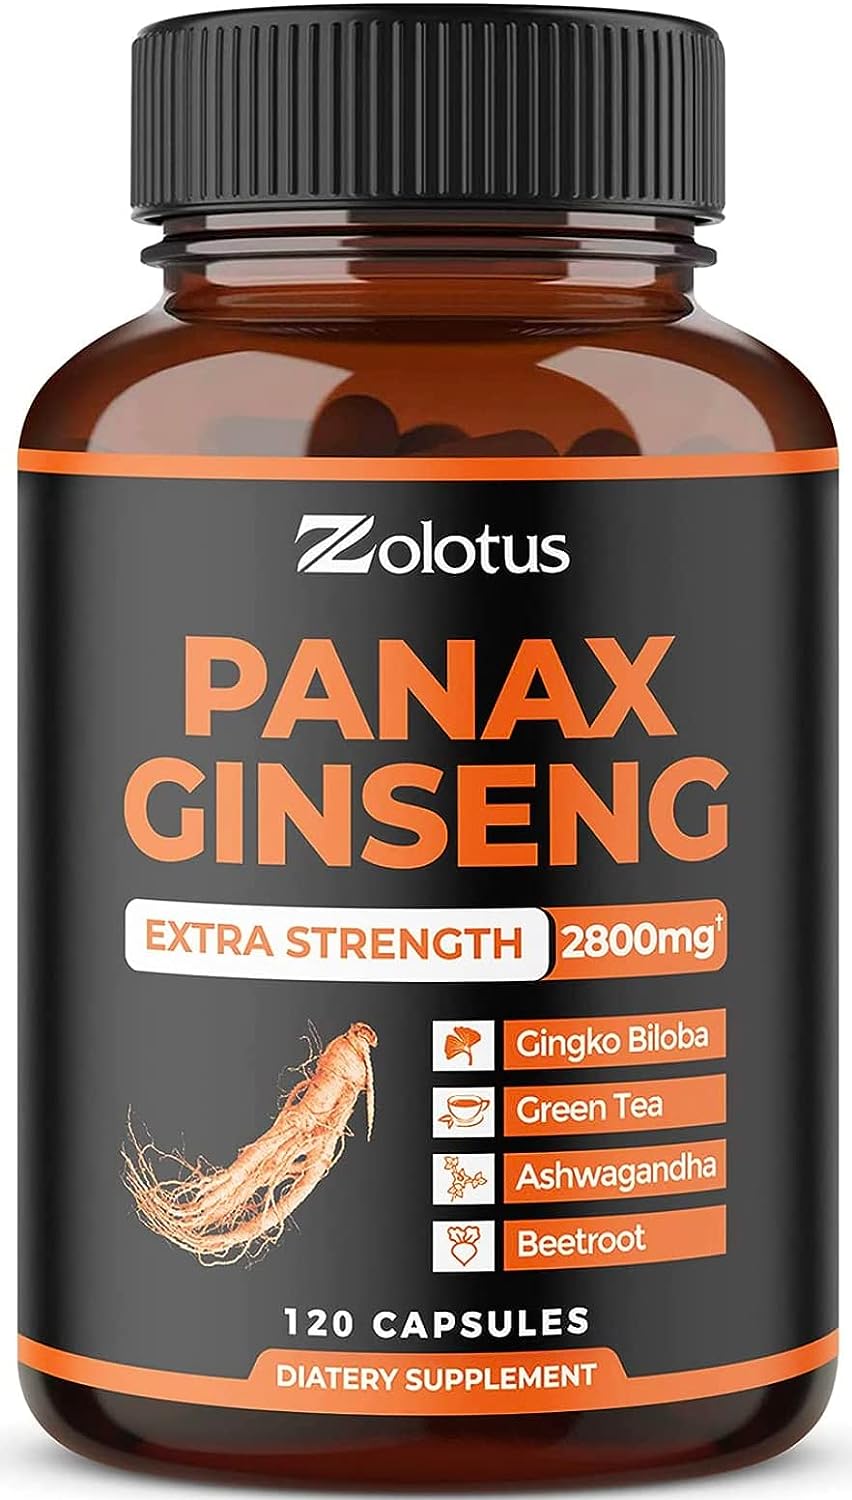 Zolotus Korean Red Panax Ginseng + Ginkgo Biloba - 2800mg Extra Strength with Ashwagandha, Beetroot,